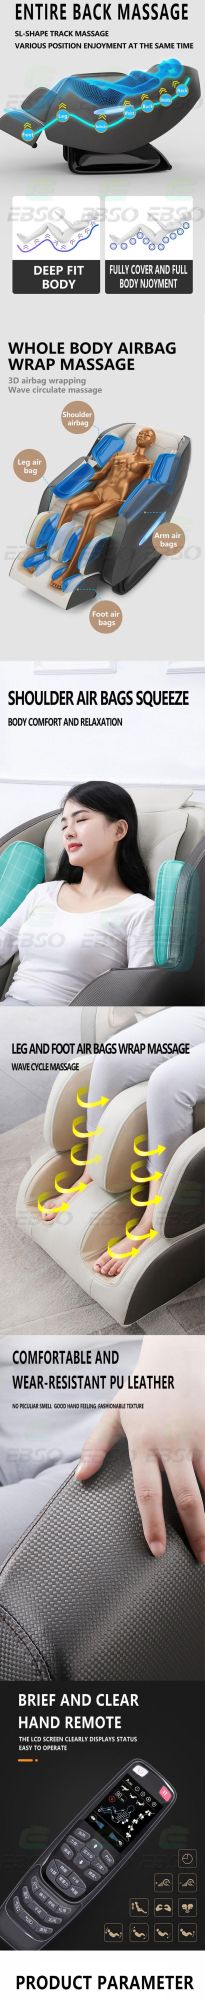 Luxury Zero Gravity Massage Chair with English Display